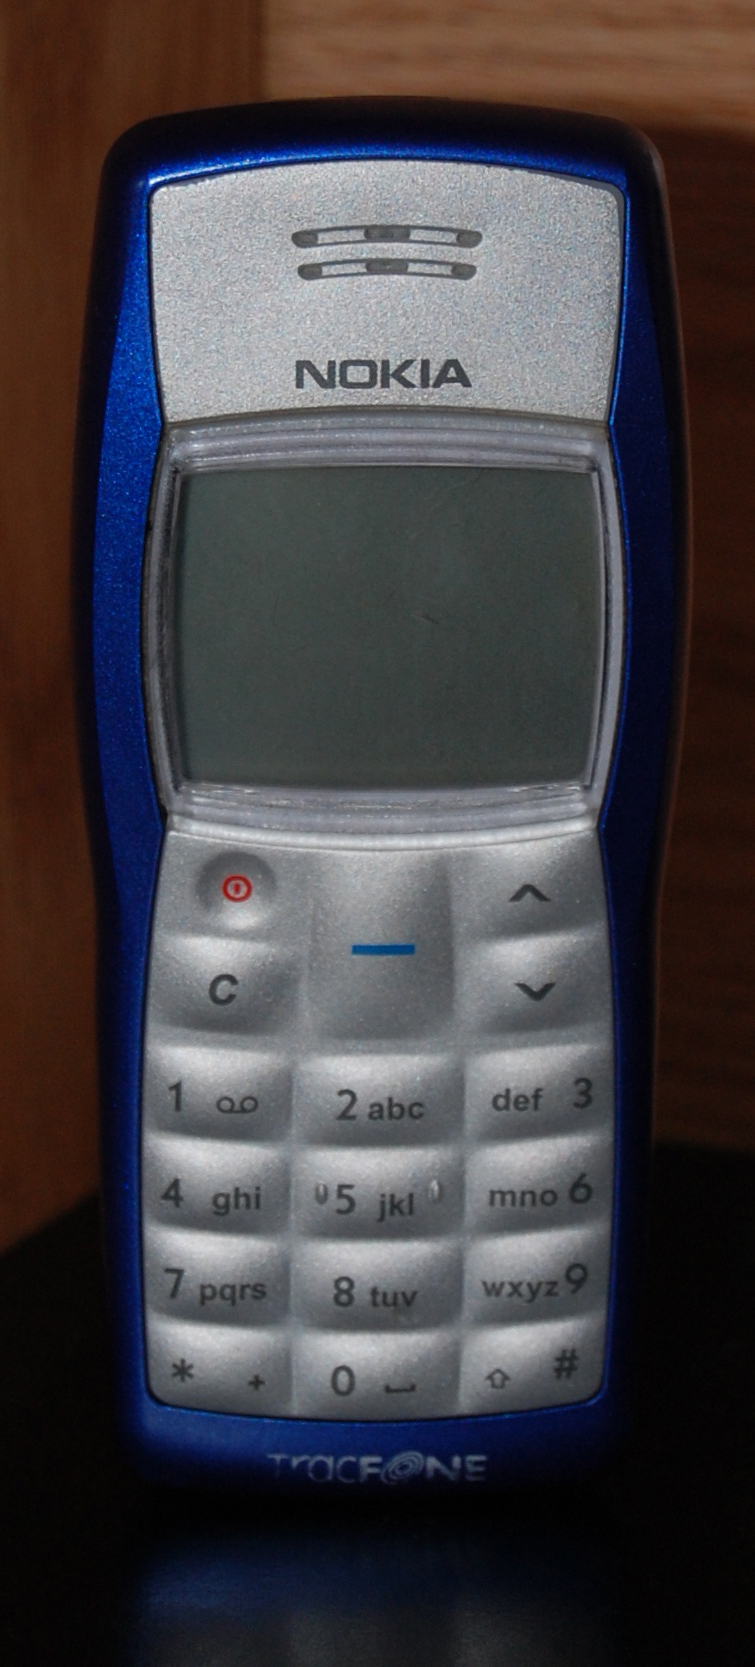 Nokia1100_Foto- Haxorjoe:Wikipedia Commons